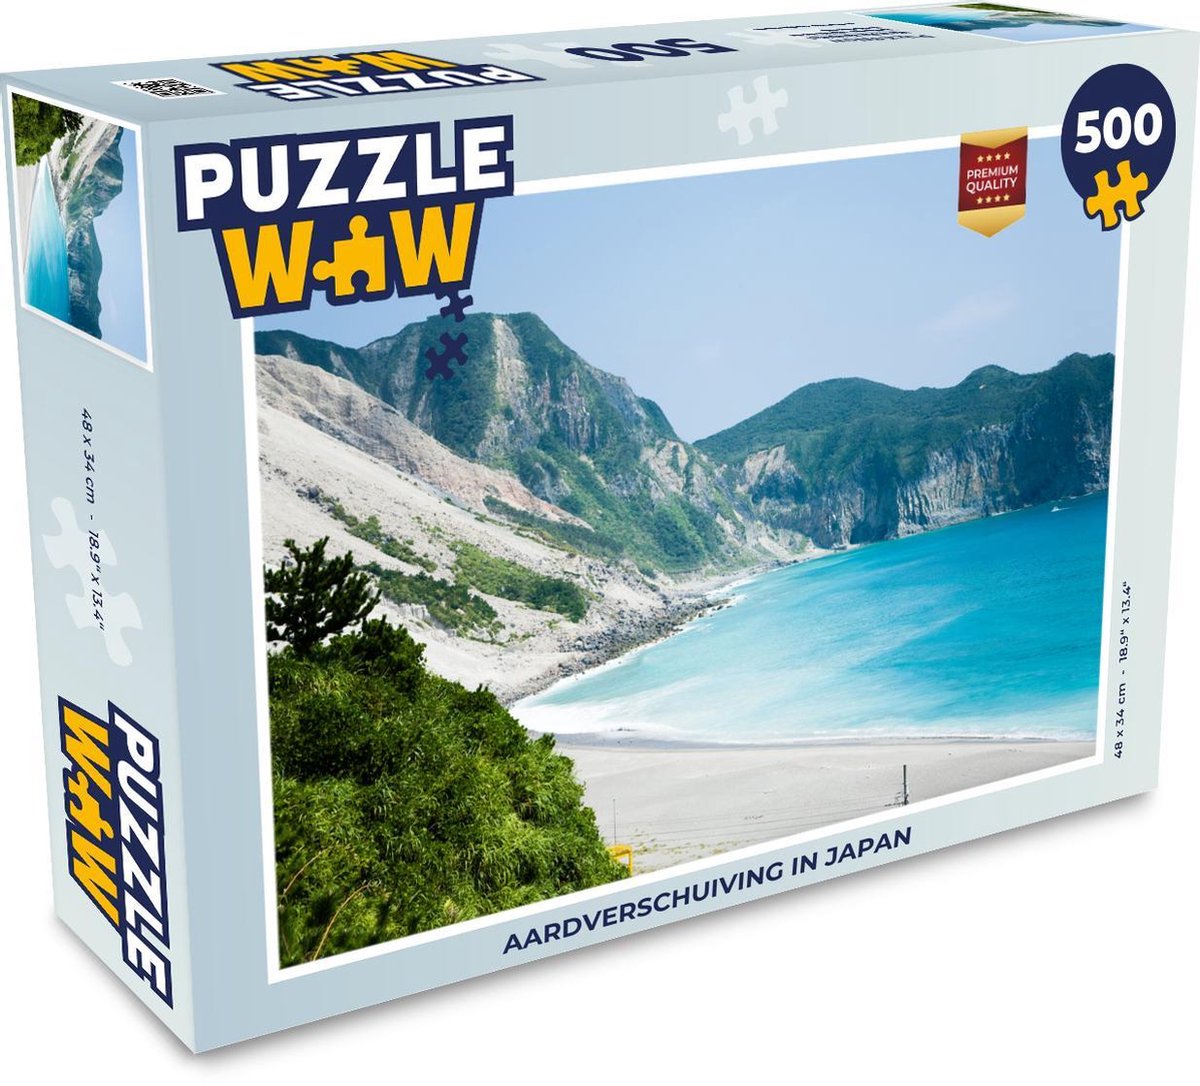 Afbeelding van product Puzzel 500 stukjes Aardverschuiving - Aardverschuiving in Japan - PuzzleWow heeft +100000 puzzels